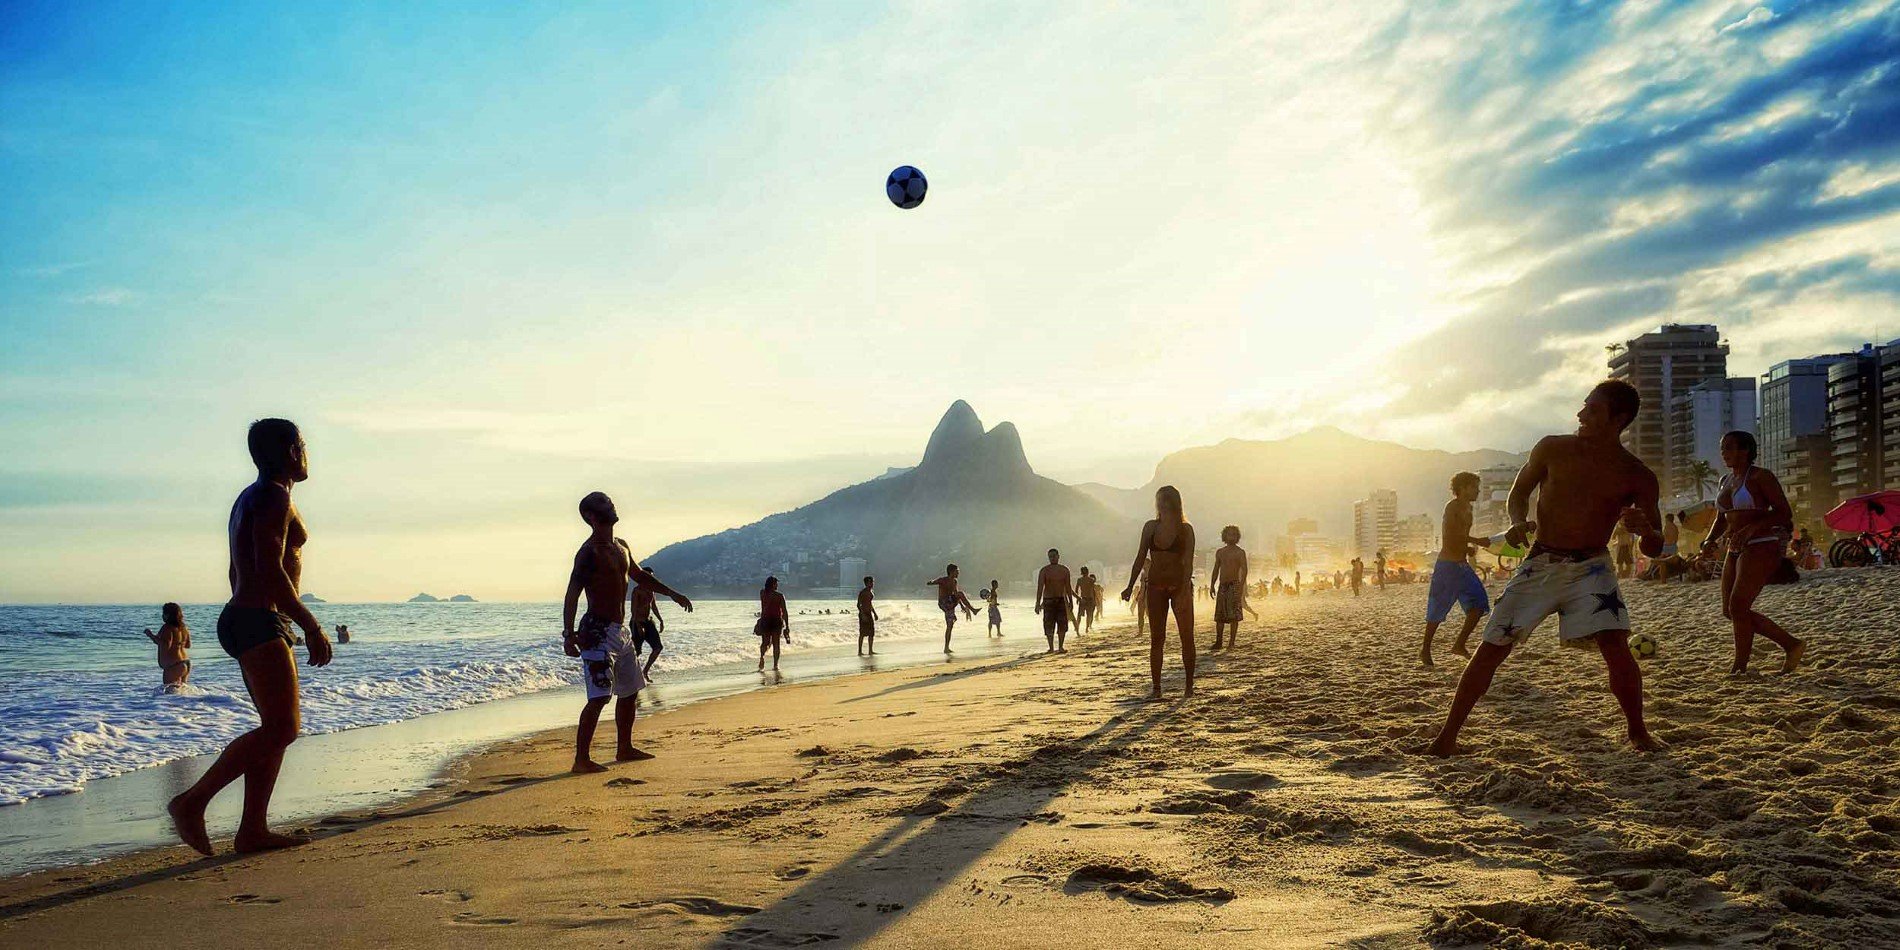 Beach football at the beach, Rio de Janeiro